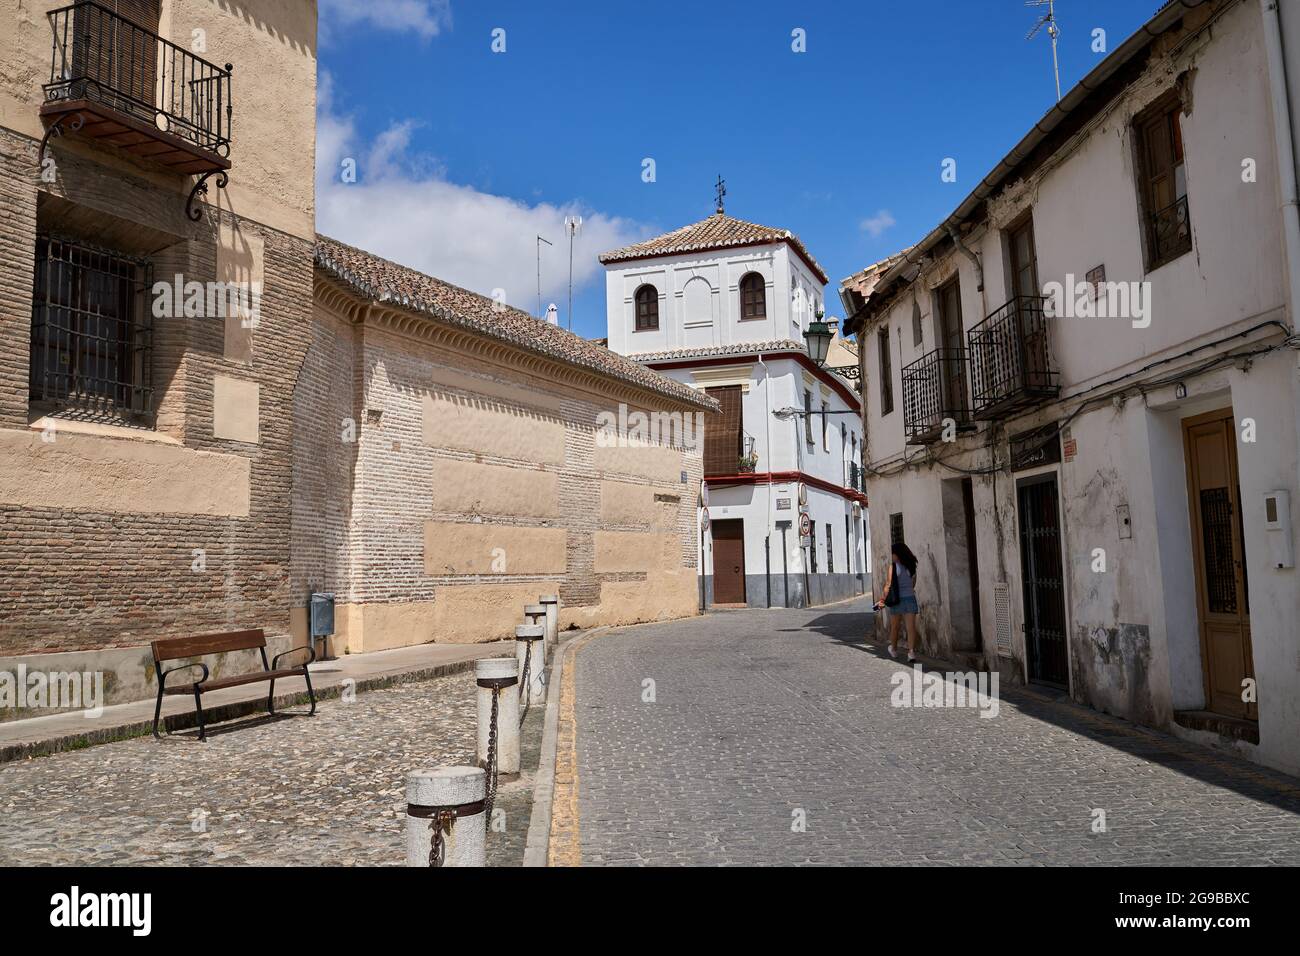 View of the albaicin neighborhood (Albayzin) in the city of Granada. Spain Stock Photo